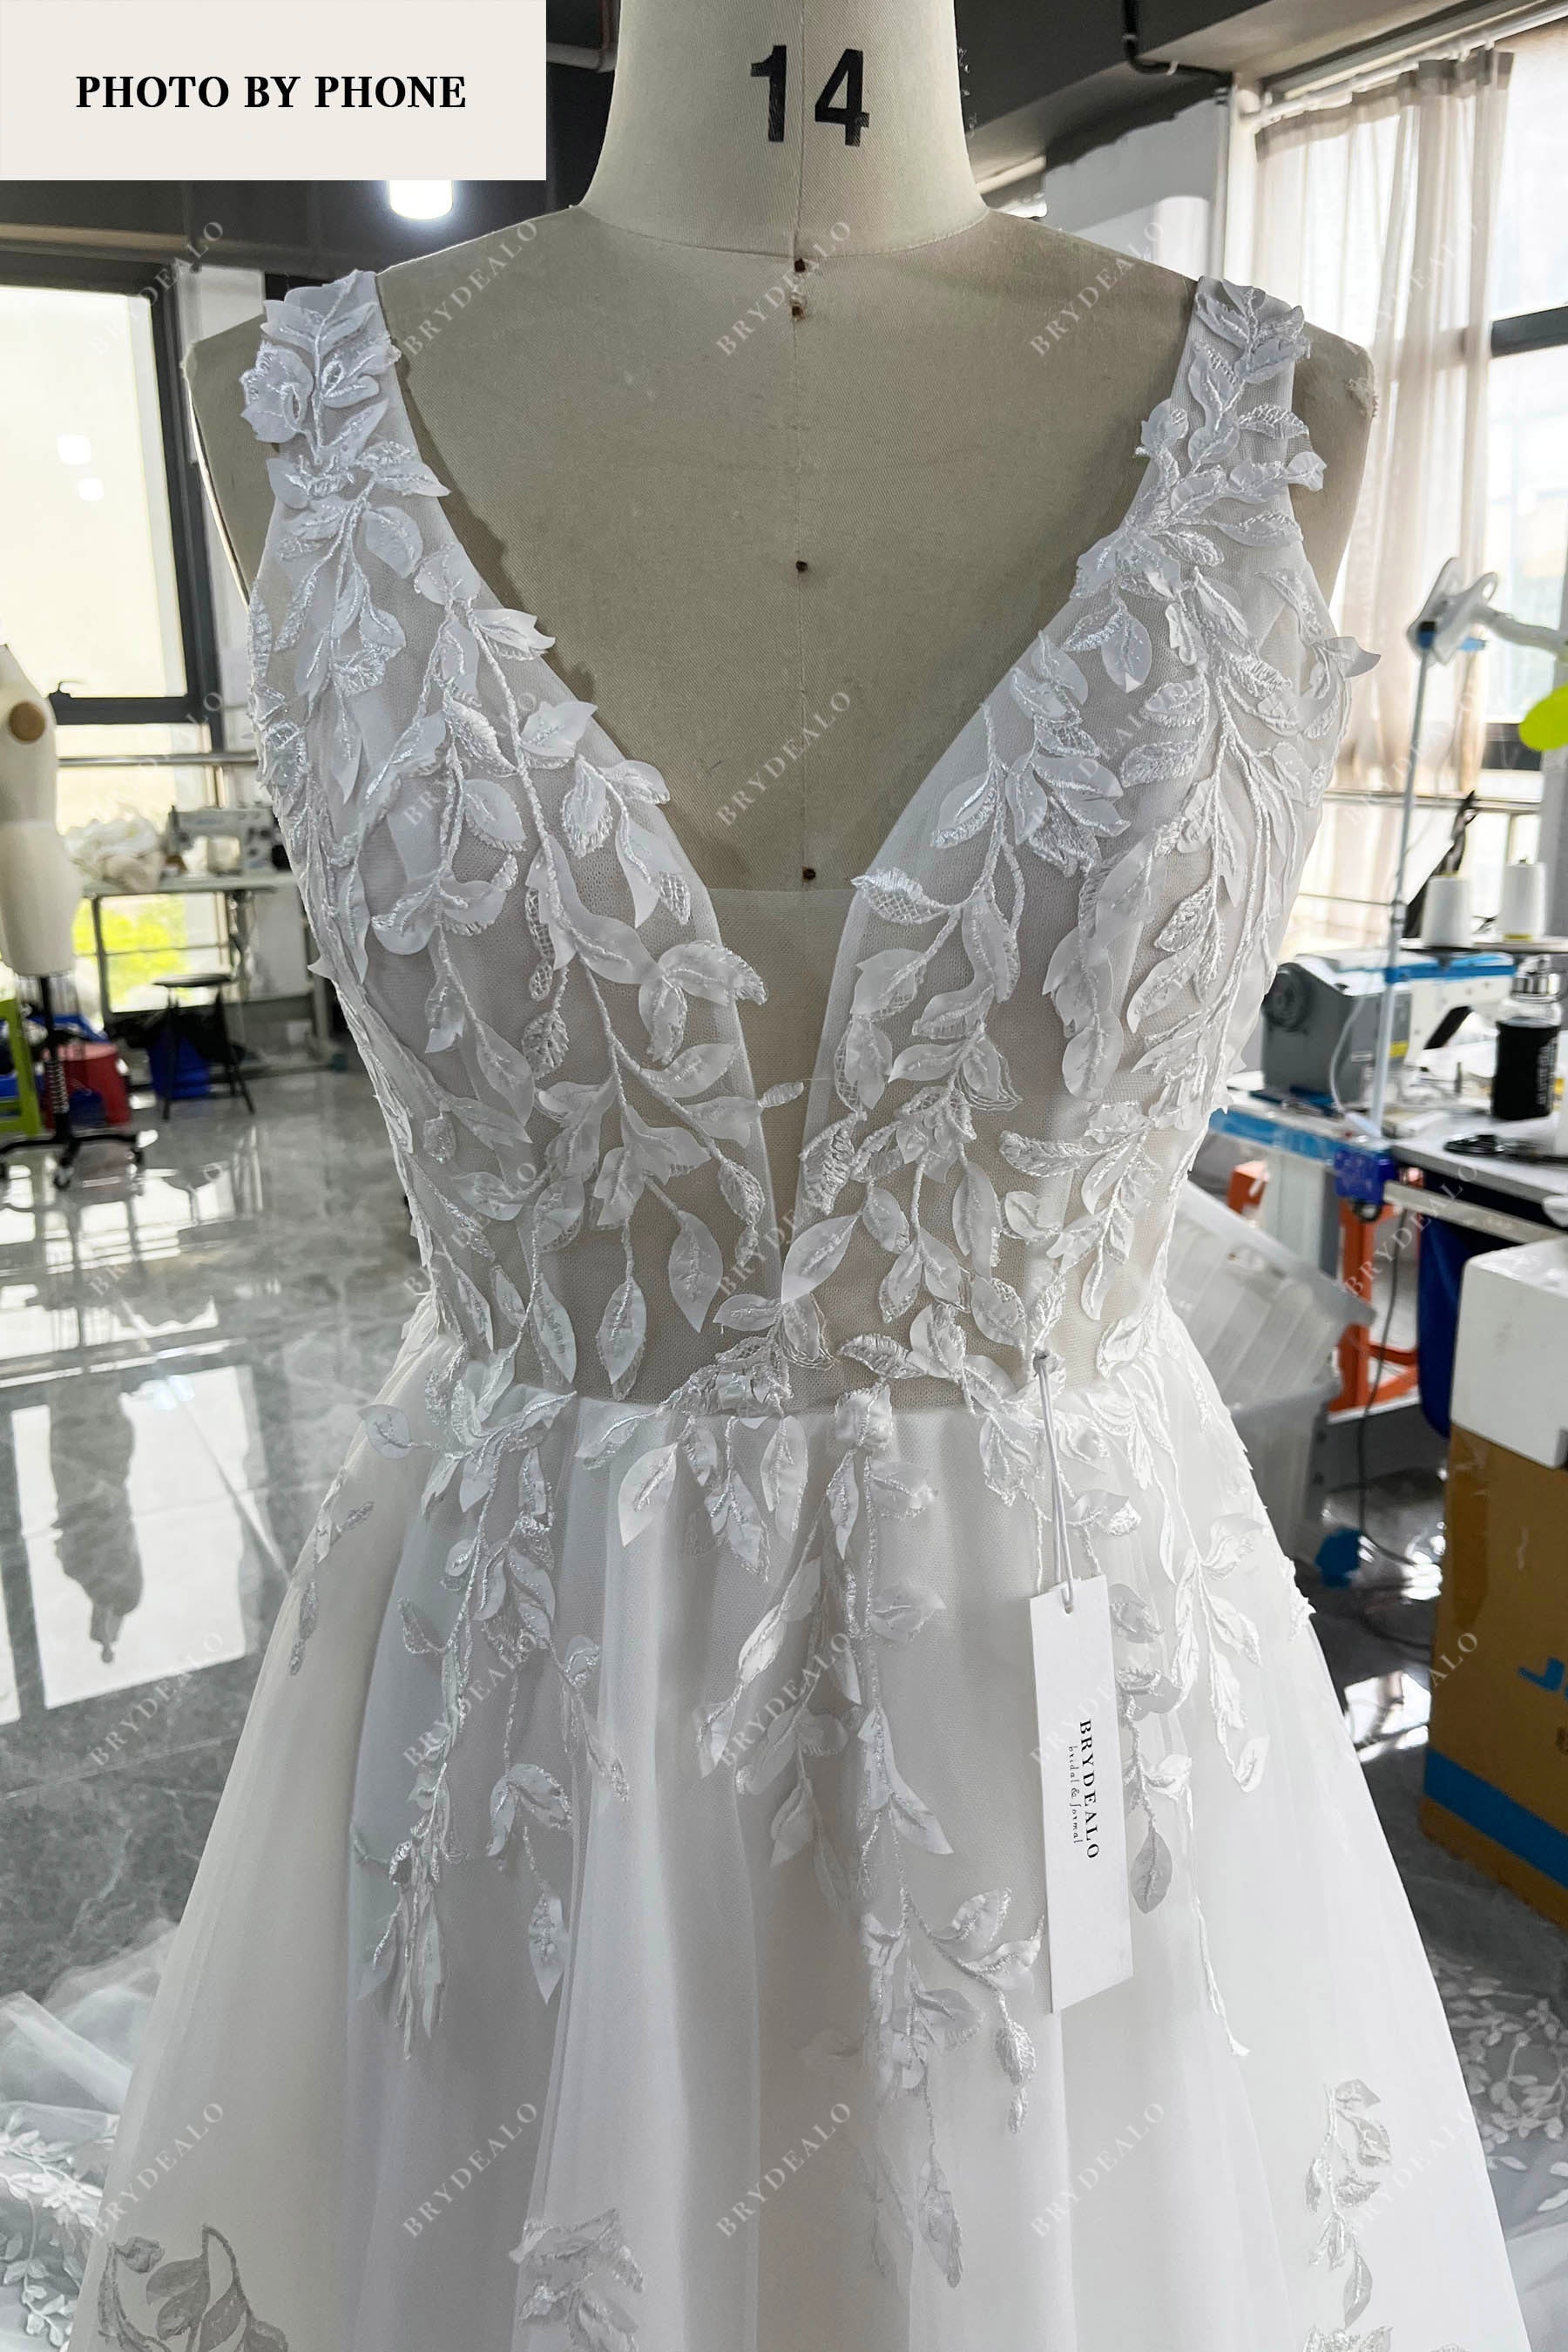 brydealo designer plunging lace wedding dress real production photo